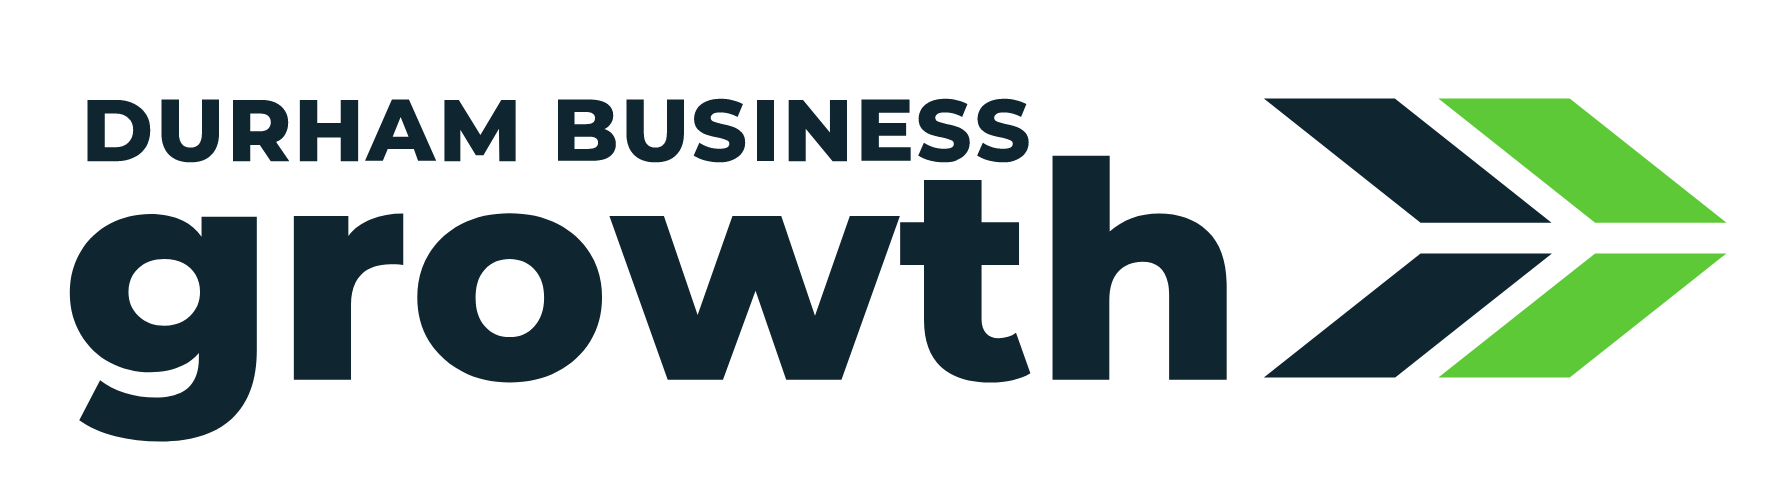 Durham Business Growth logo